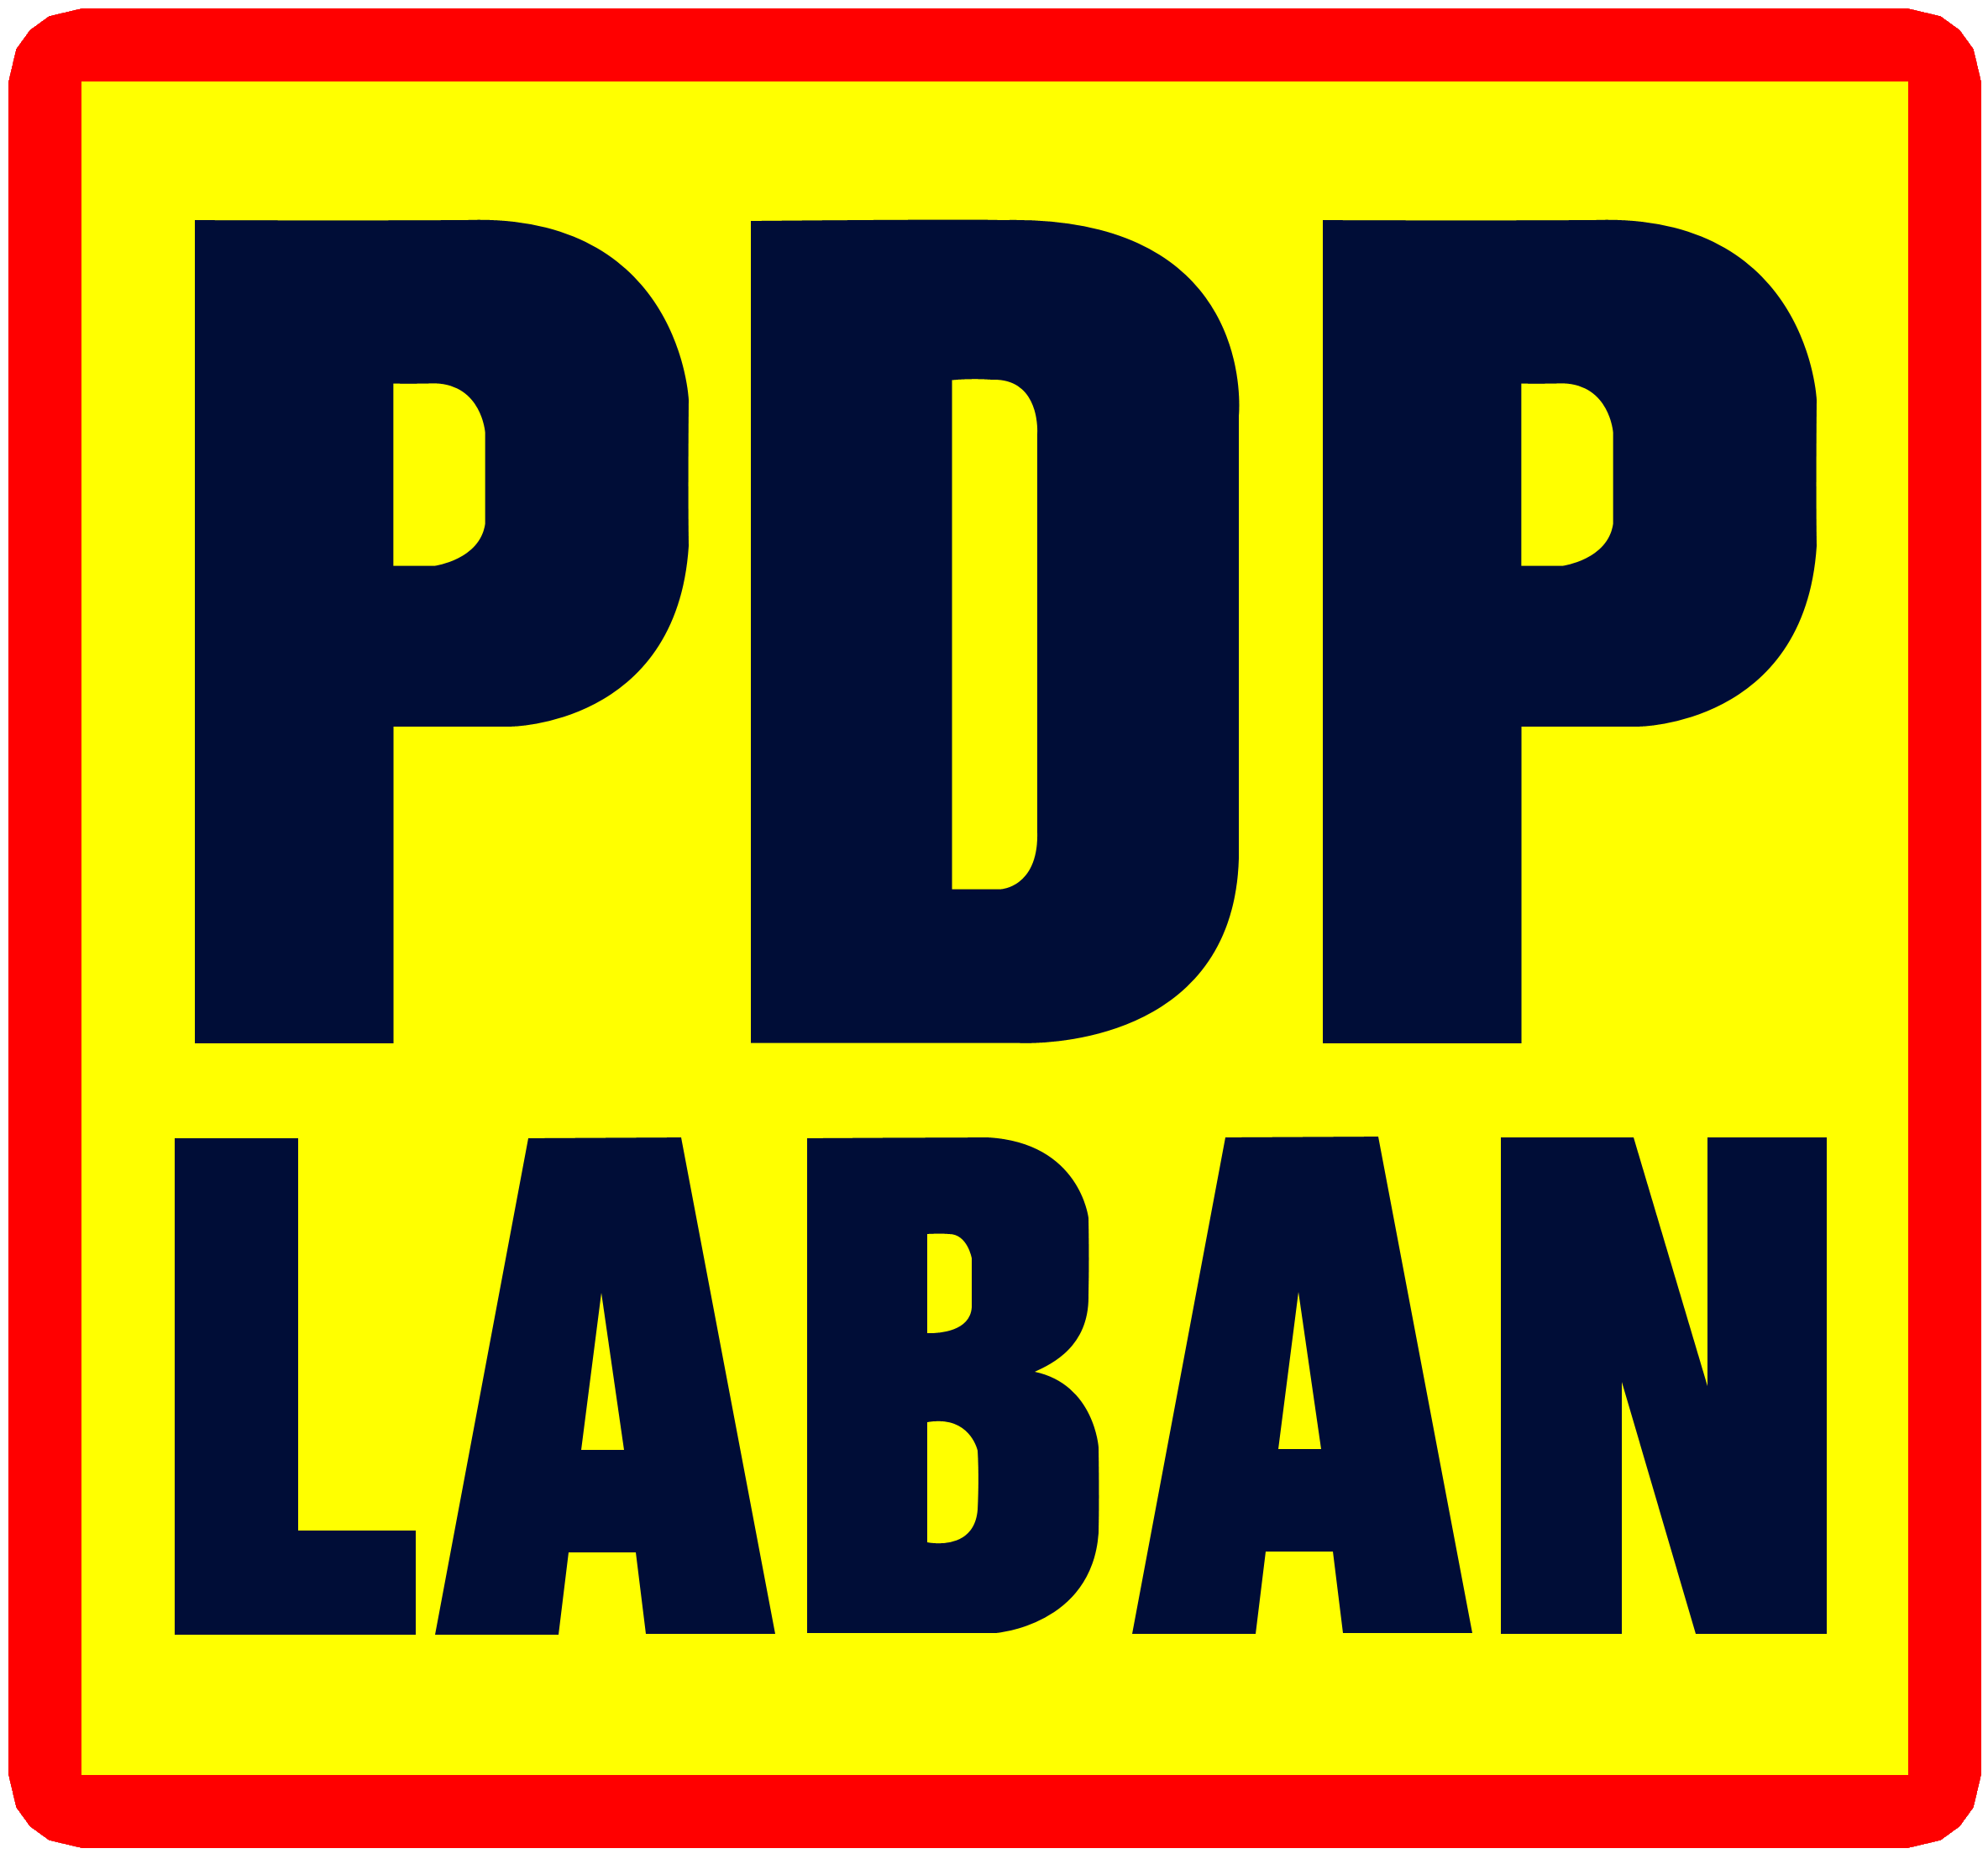 PDP Logo - File:PDP-Laban logo.png - Wikimedia Commons